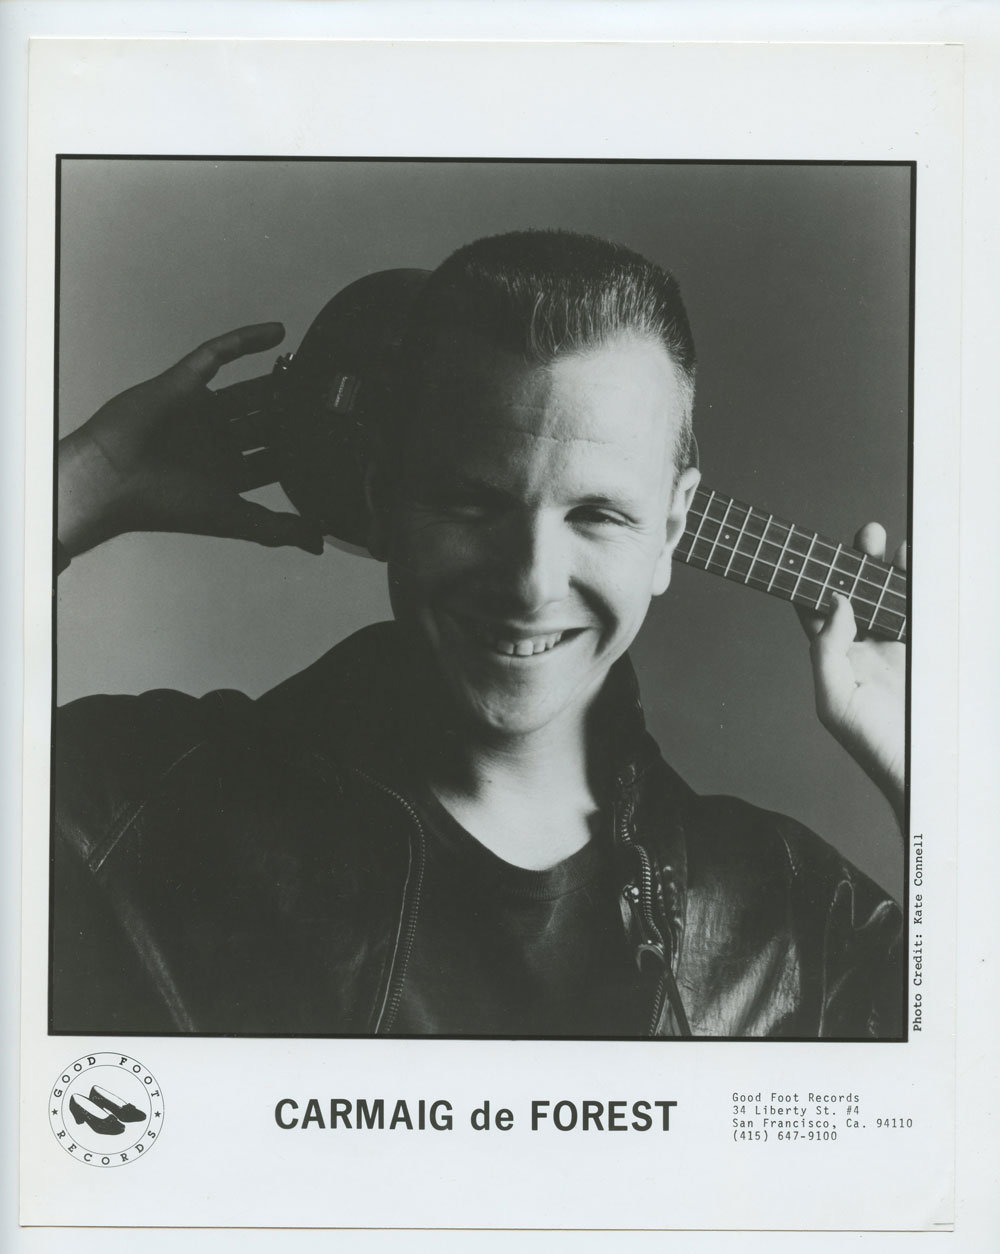 Carmaig de Forest Photo 1980s Good Foot Records